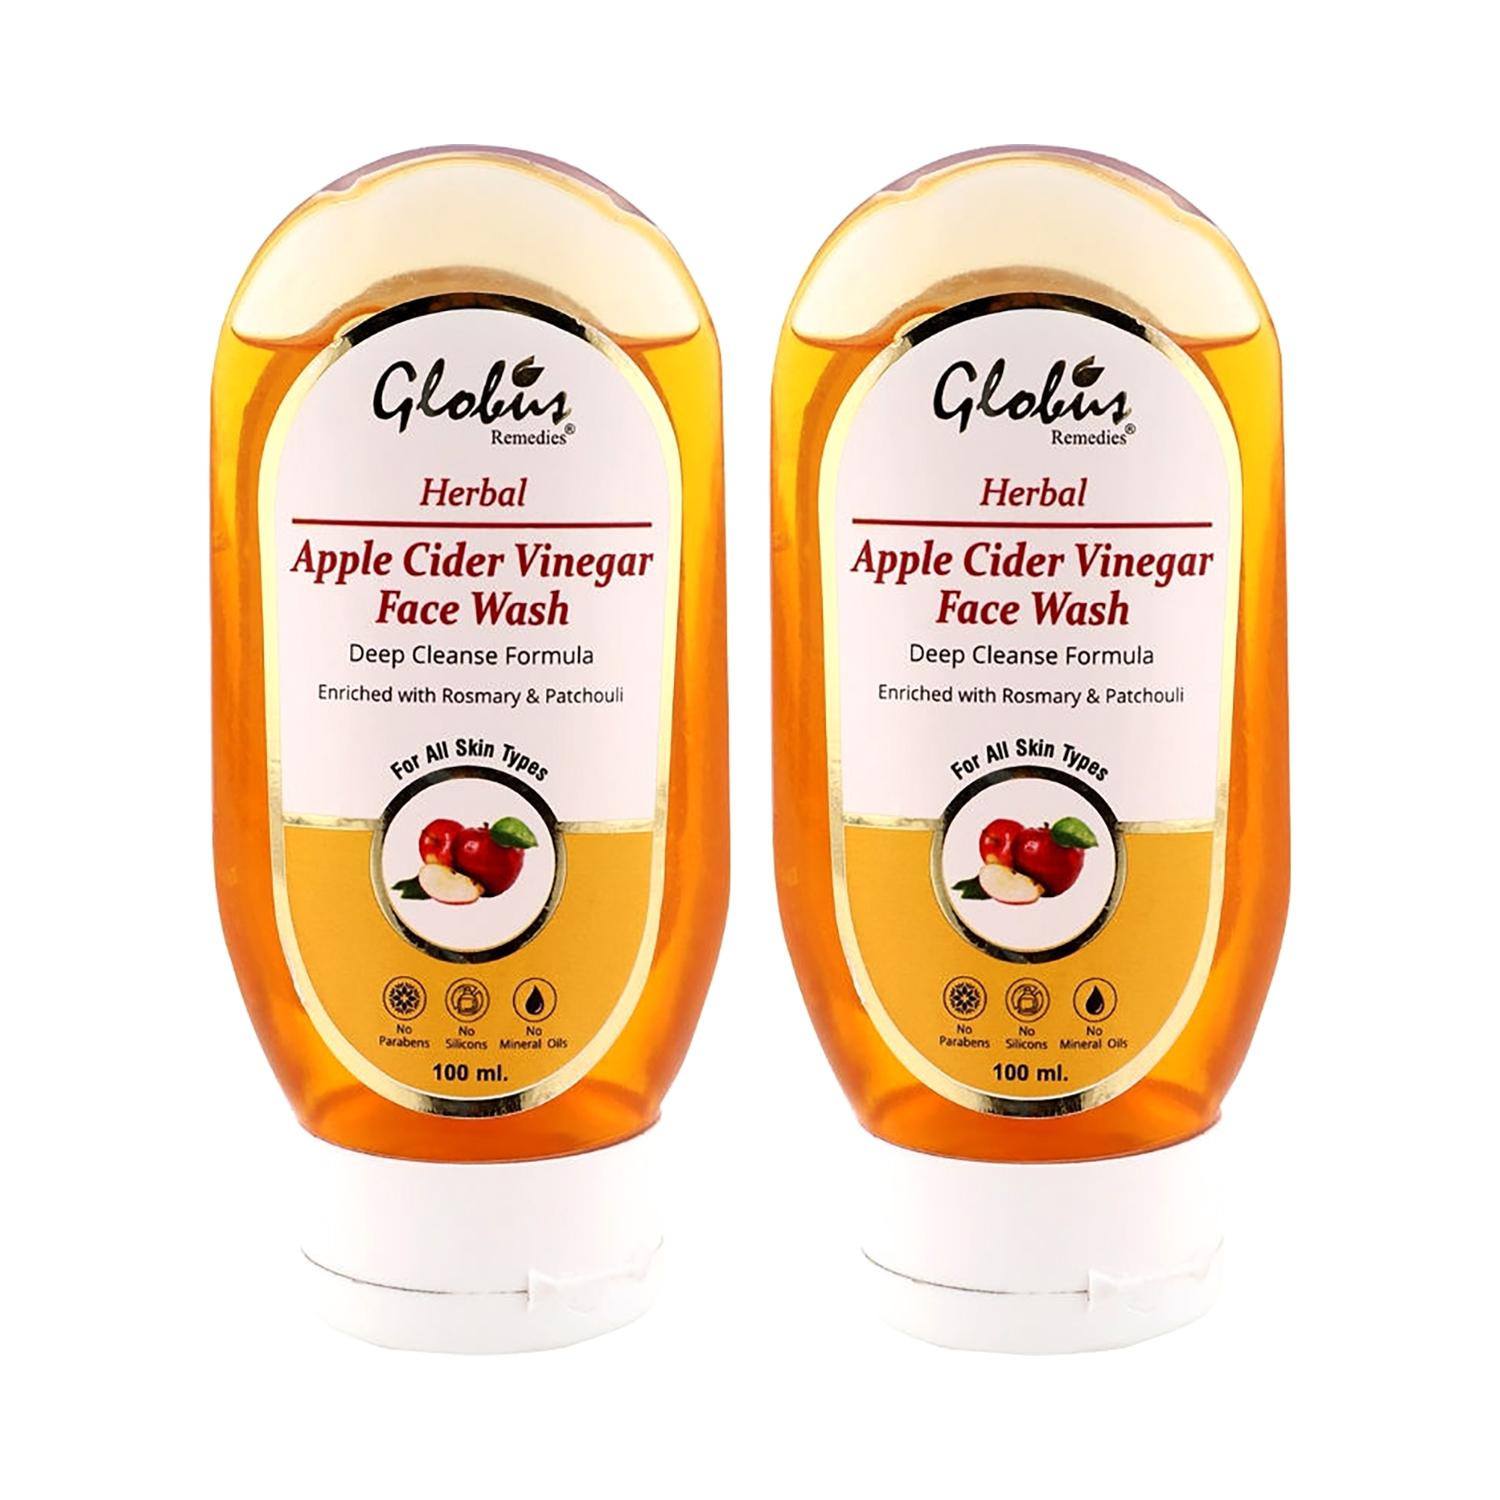 globus remedies apple cider vinegar face wash - (2 pcs)